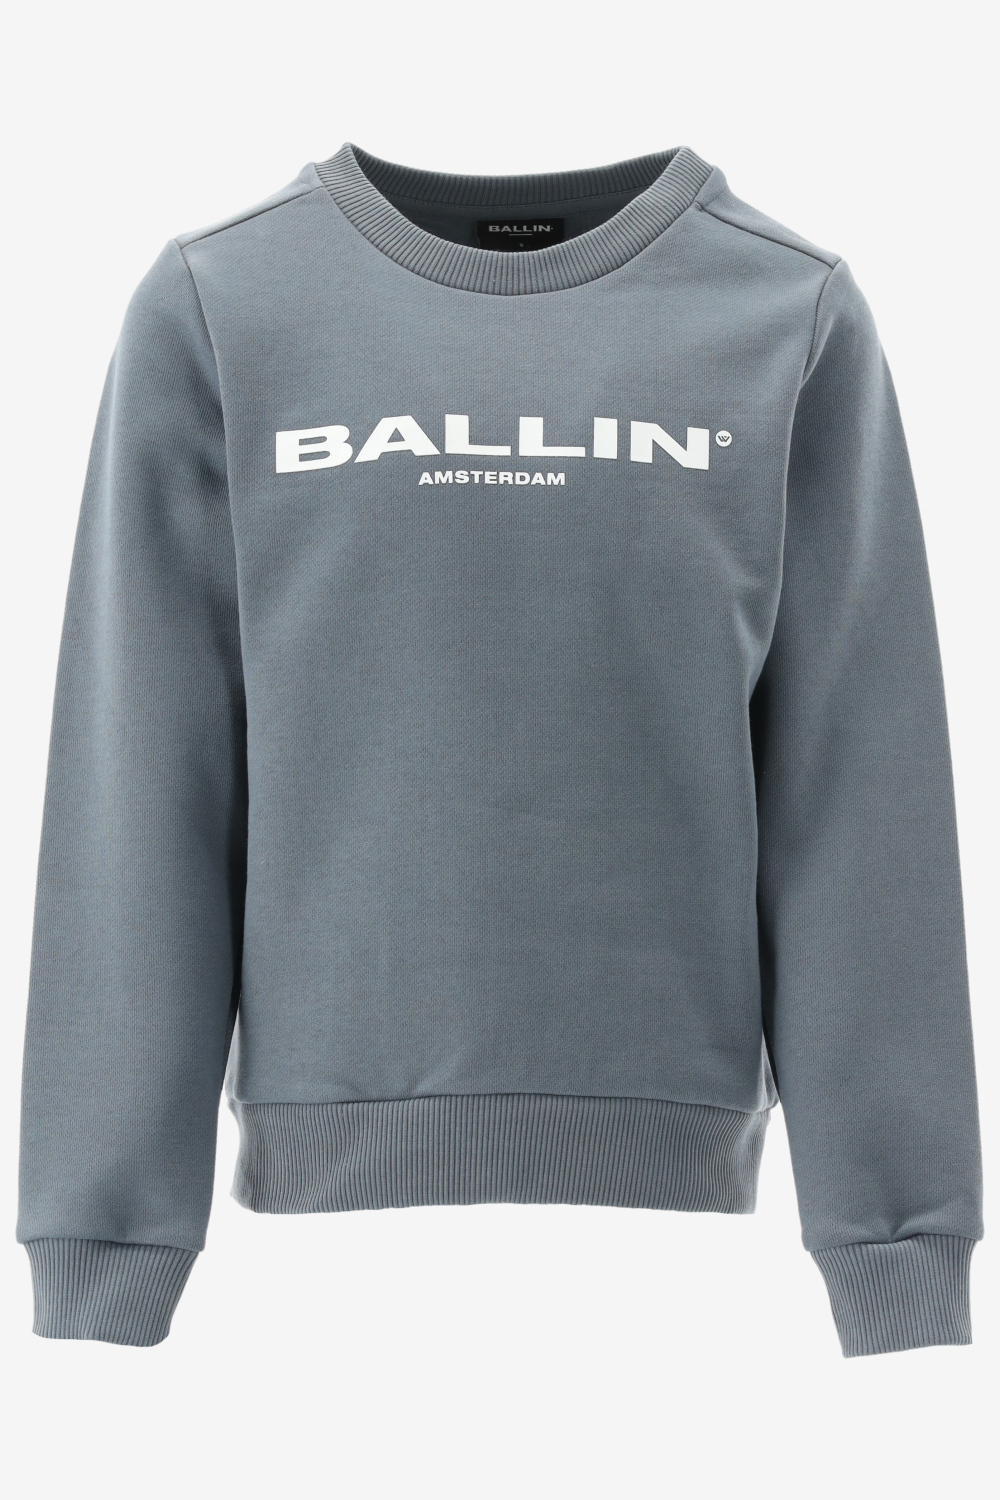 Ballin Amsterdam -  Jongens Slim Fit  Original Sweater  - Blauw - Maat 176